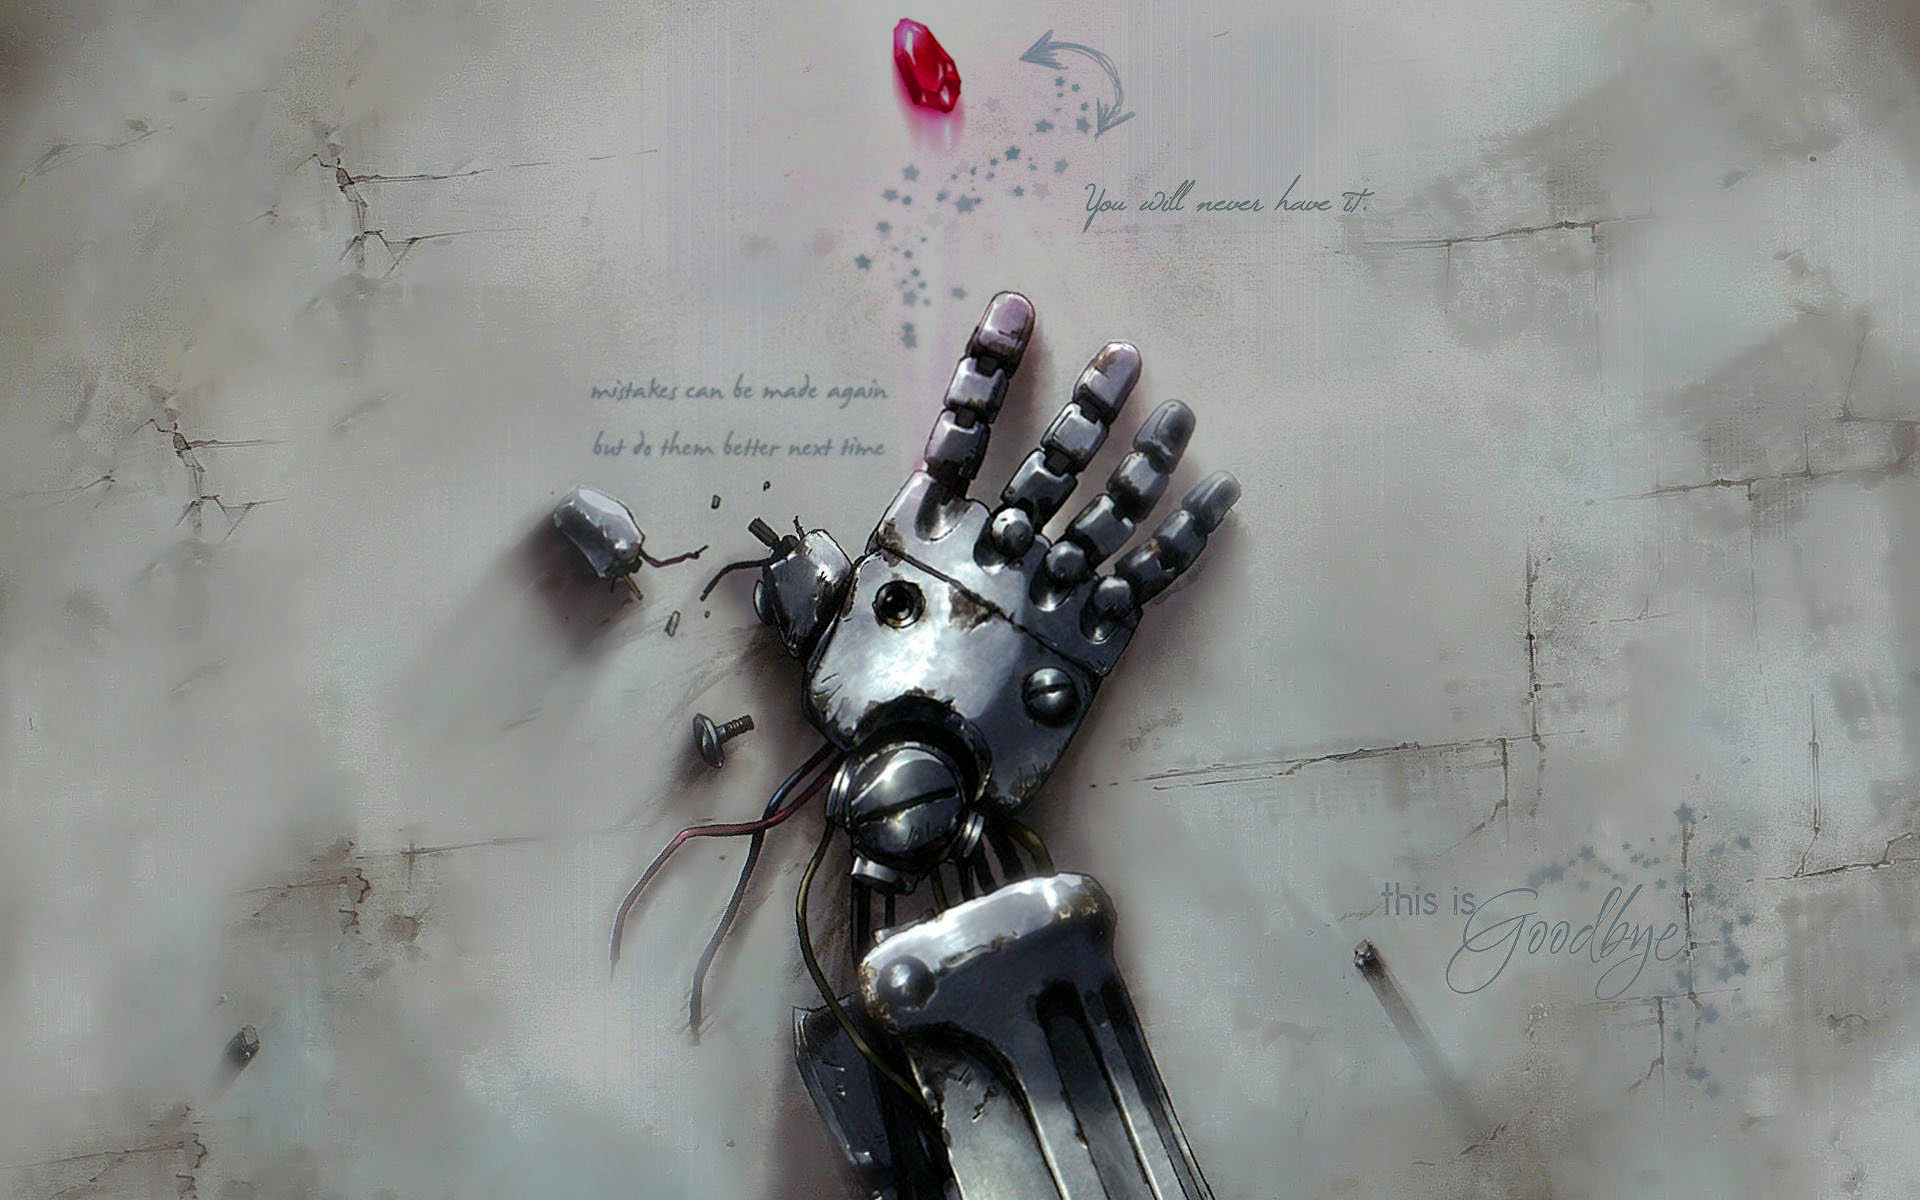 Broken Robot Arm wallpaper and image .zastavki.com